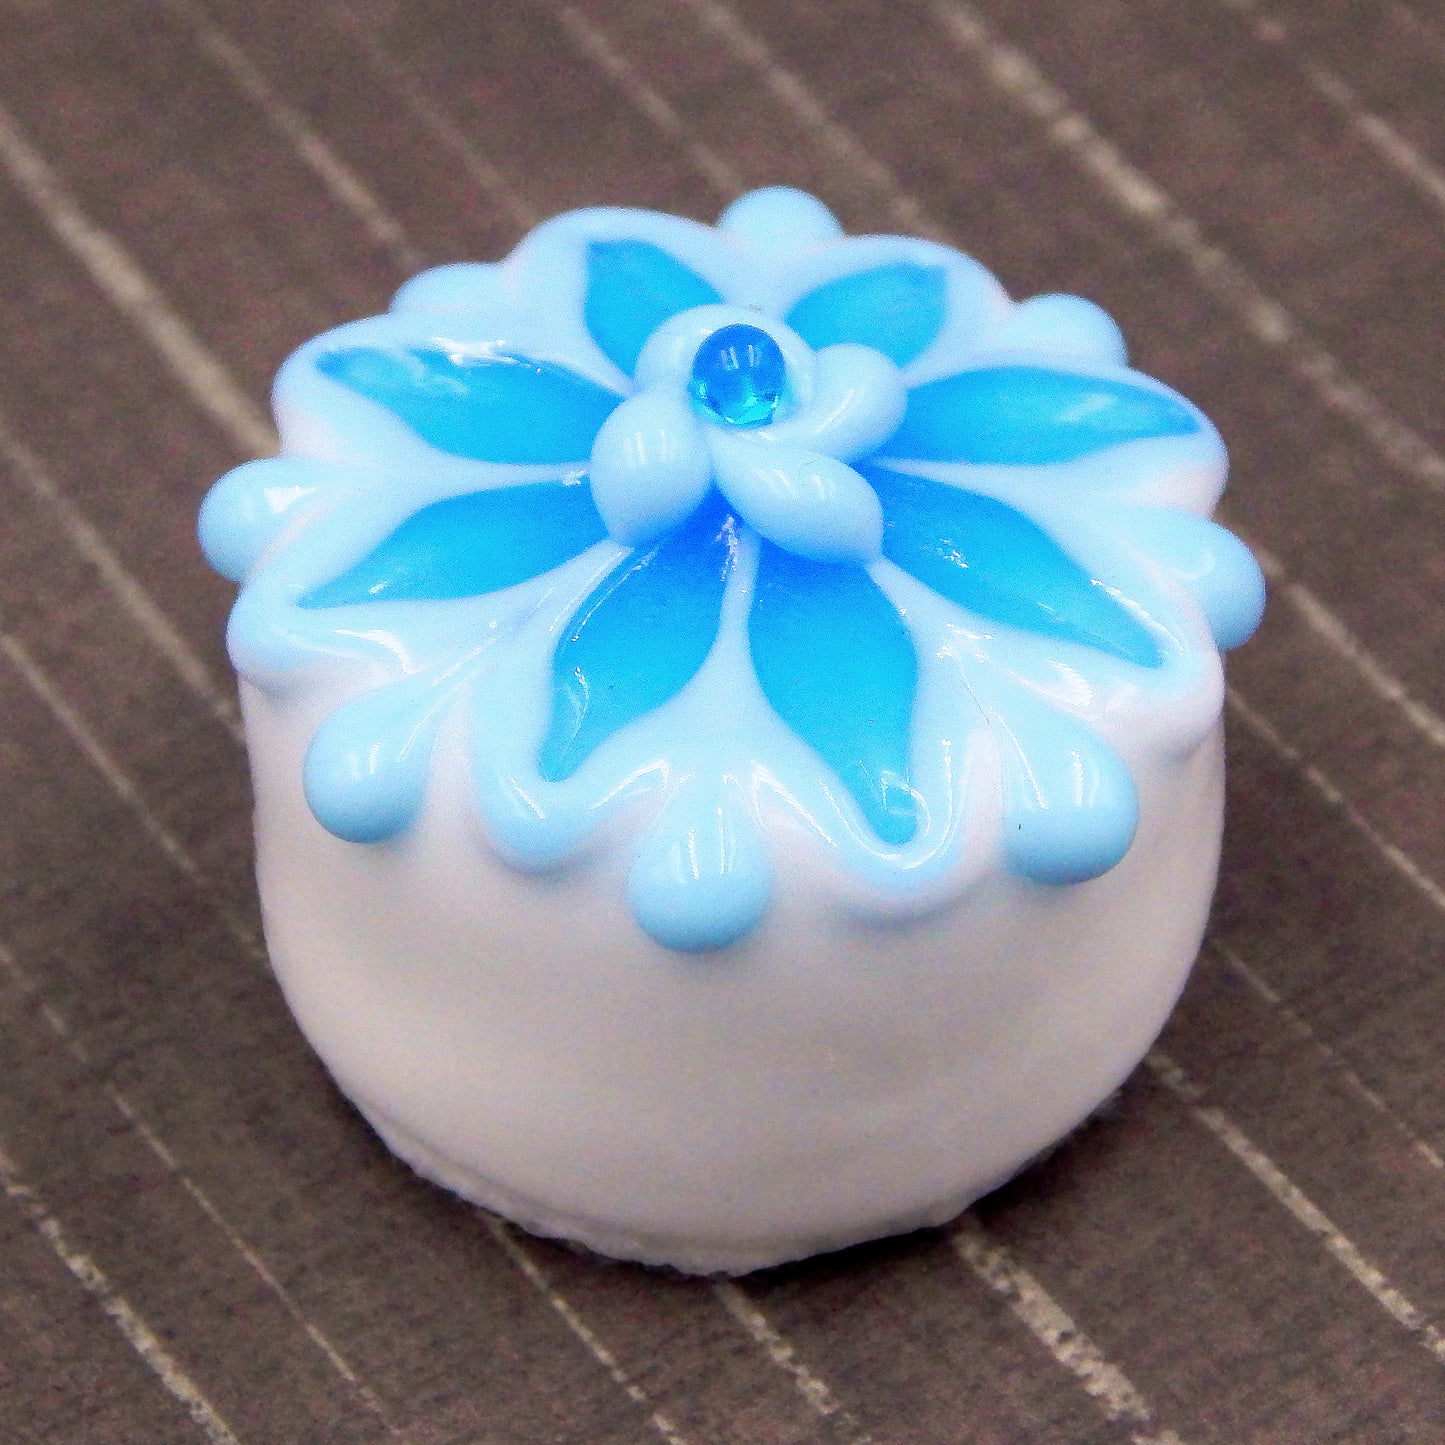 White Chocolate Treat with Berry Blue Starflower (15-071WBB)